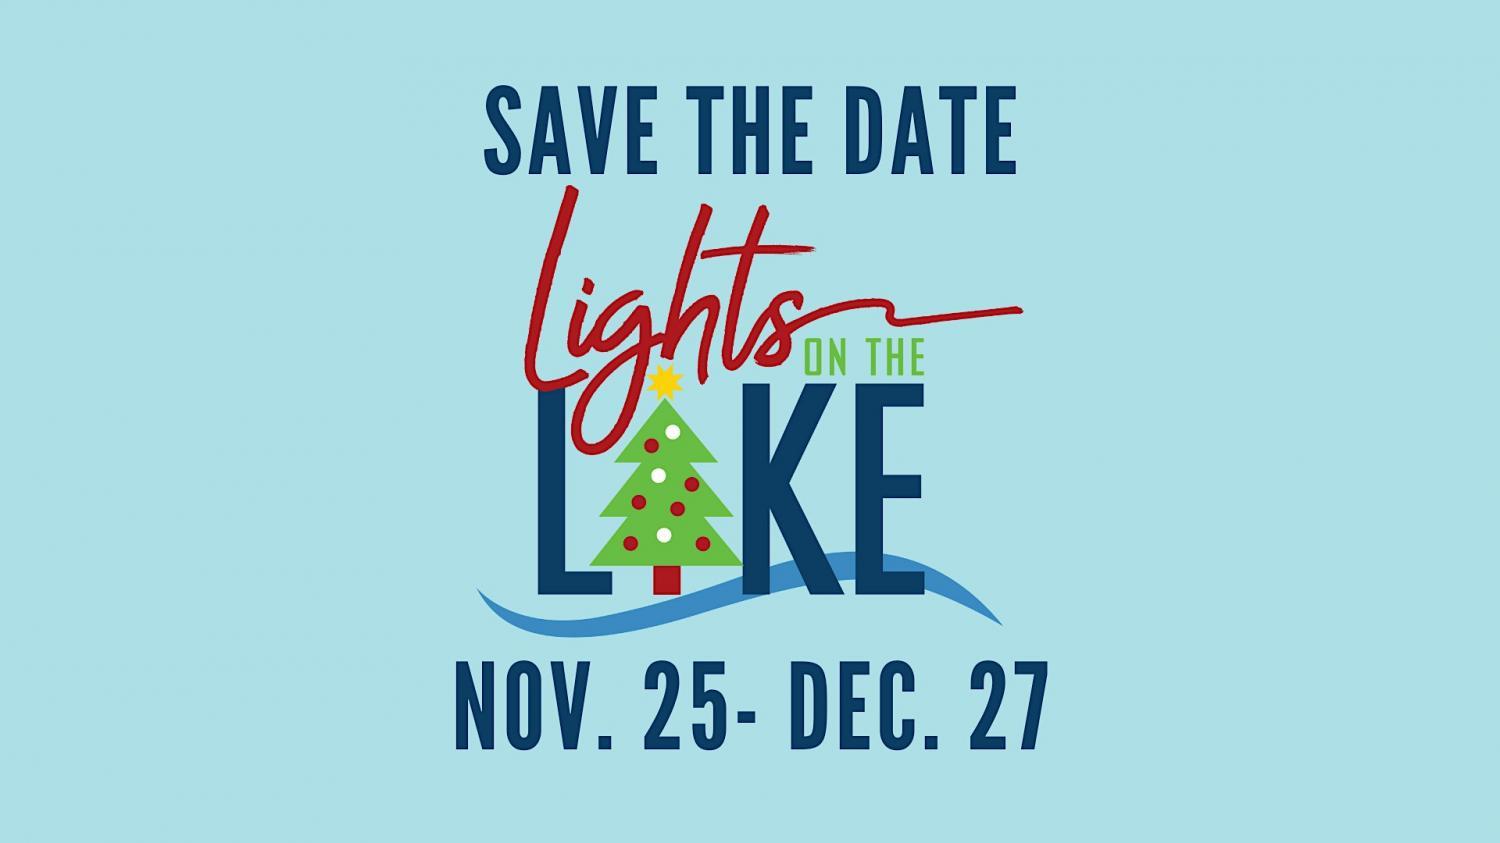 Lights on The Lake Little Elm
Sun Dec 25, 6:00 PM - Sun Dec 25, 10:00 PM
in 51 days